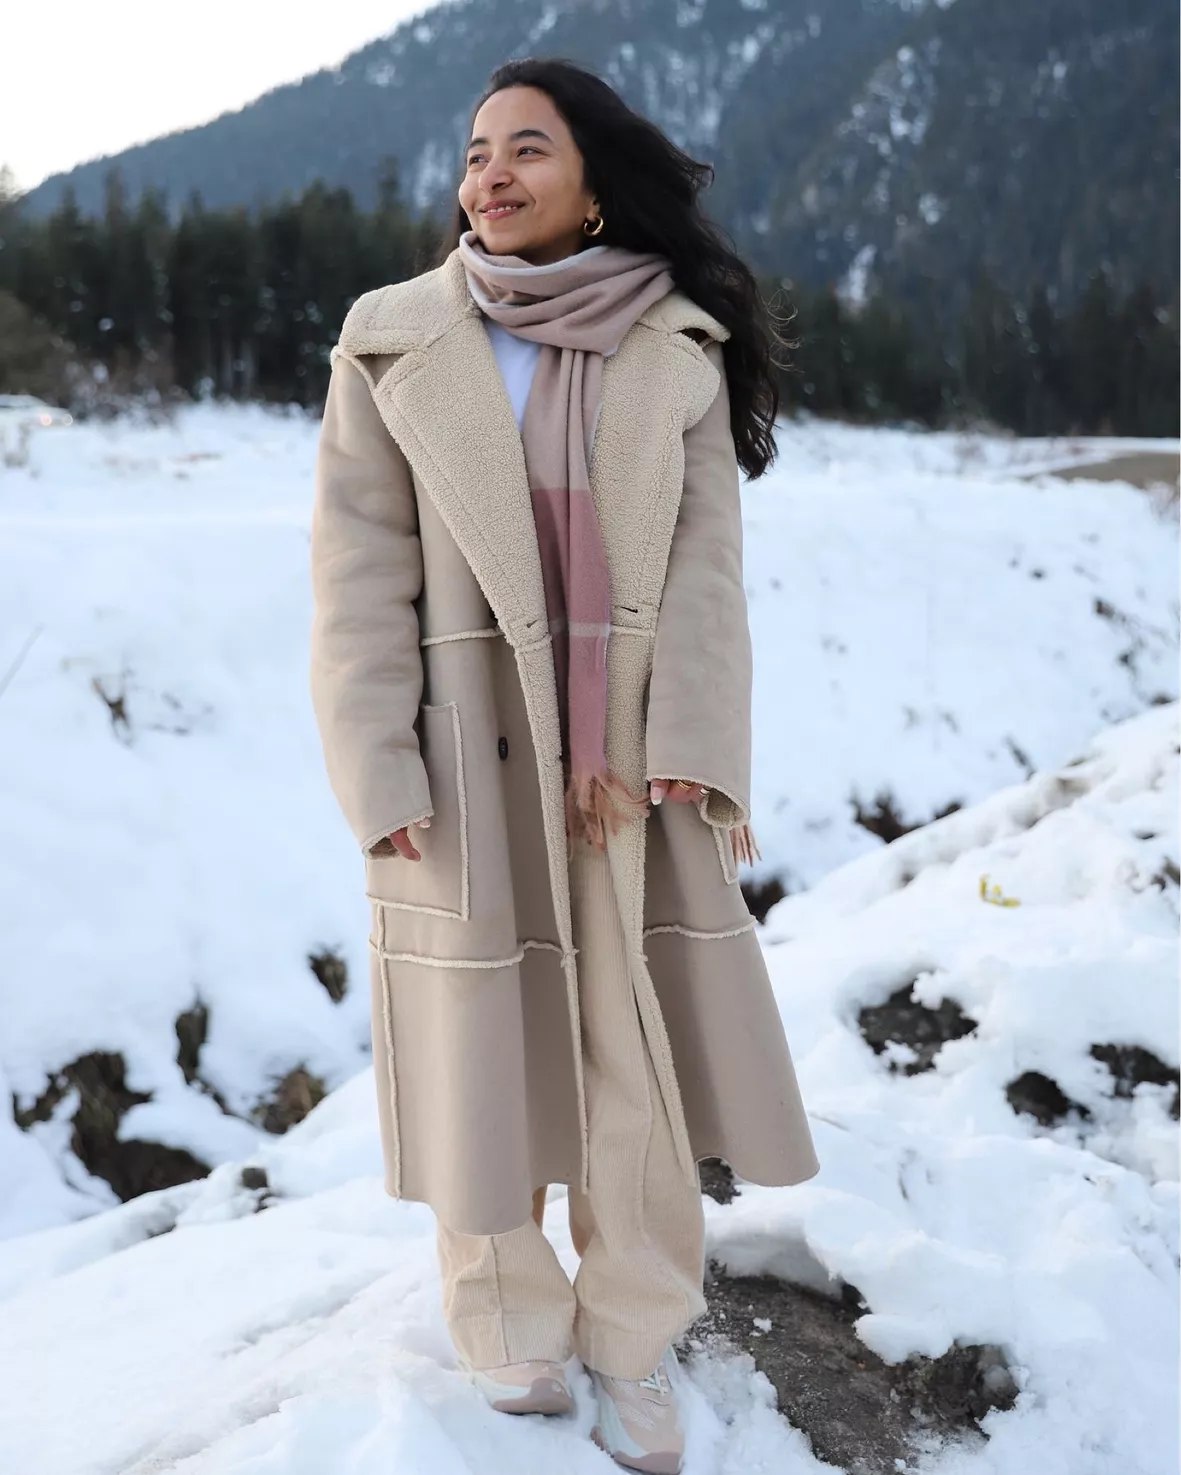 Wander Agio Women's Fashion Scarves Long Shawl Winter Thick Warm Knit Large  Plaid Scarf